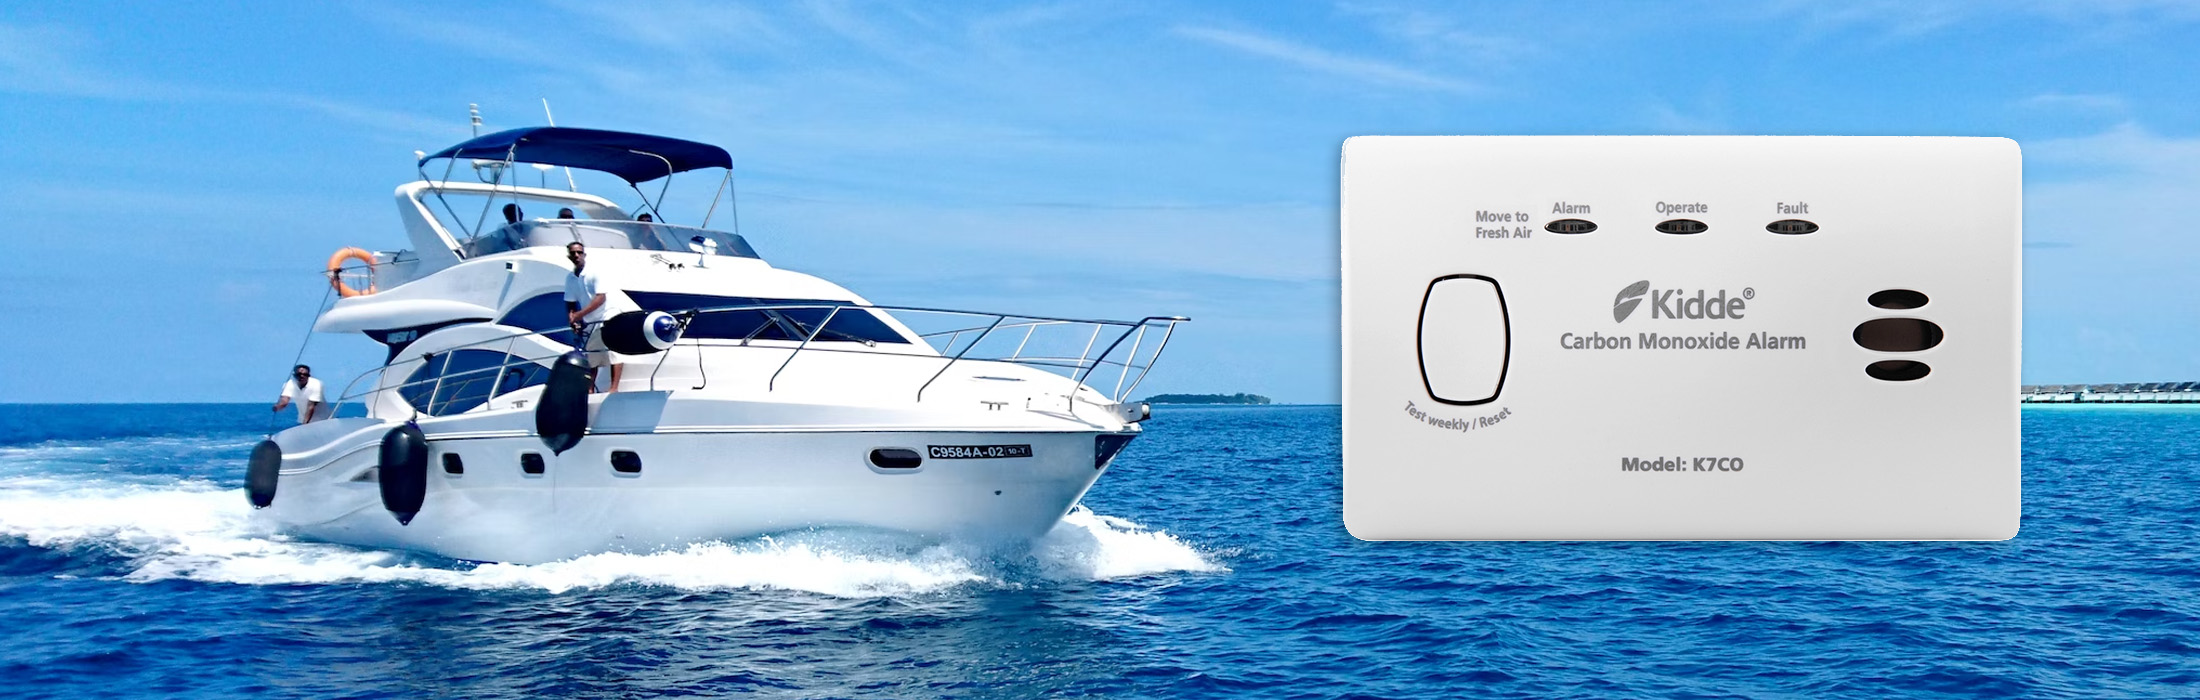 Carbon Monoxide Safety on Boats